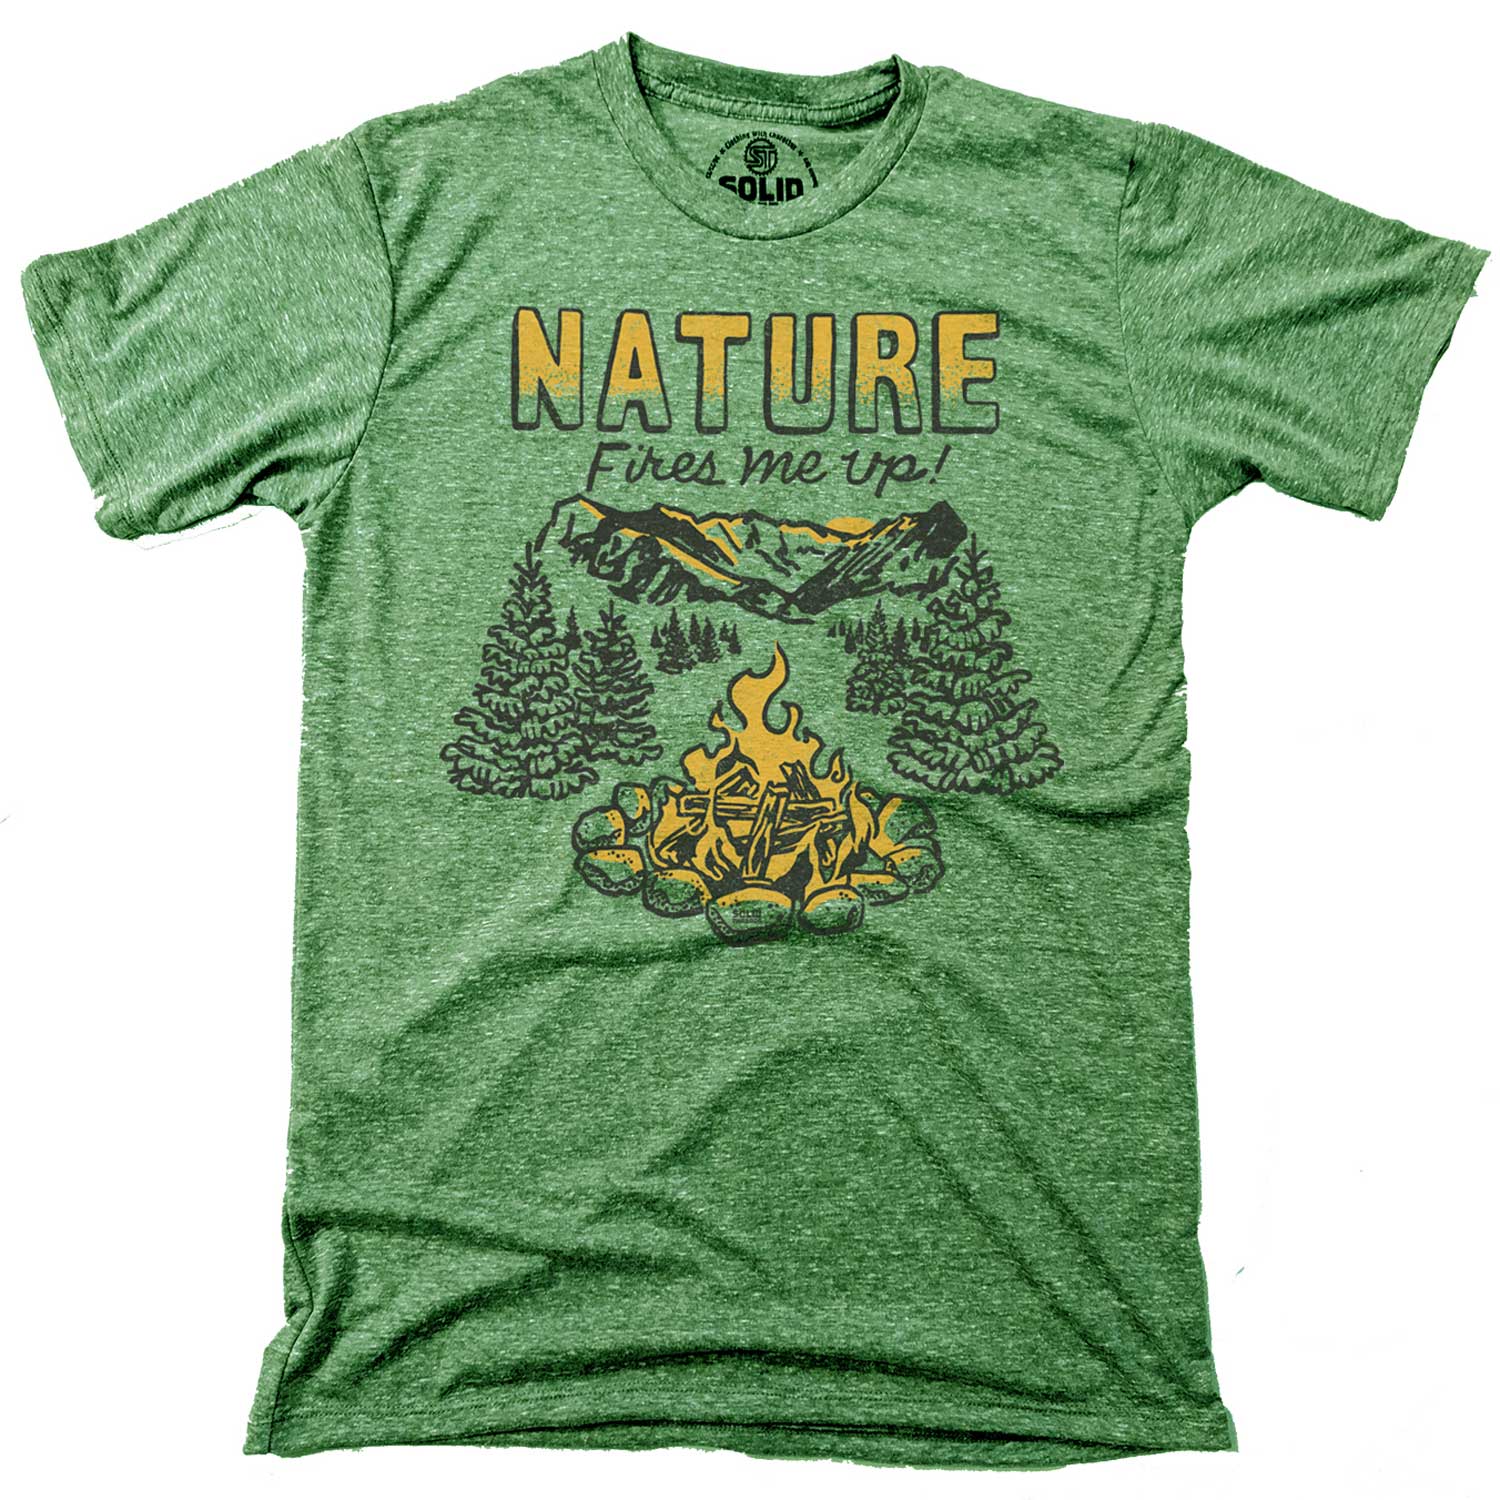 Environmental T-shirts, Climate Change Tees